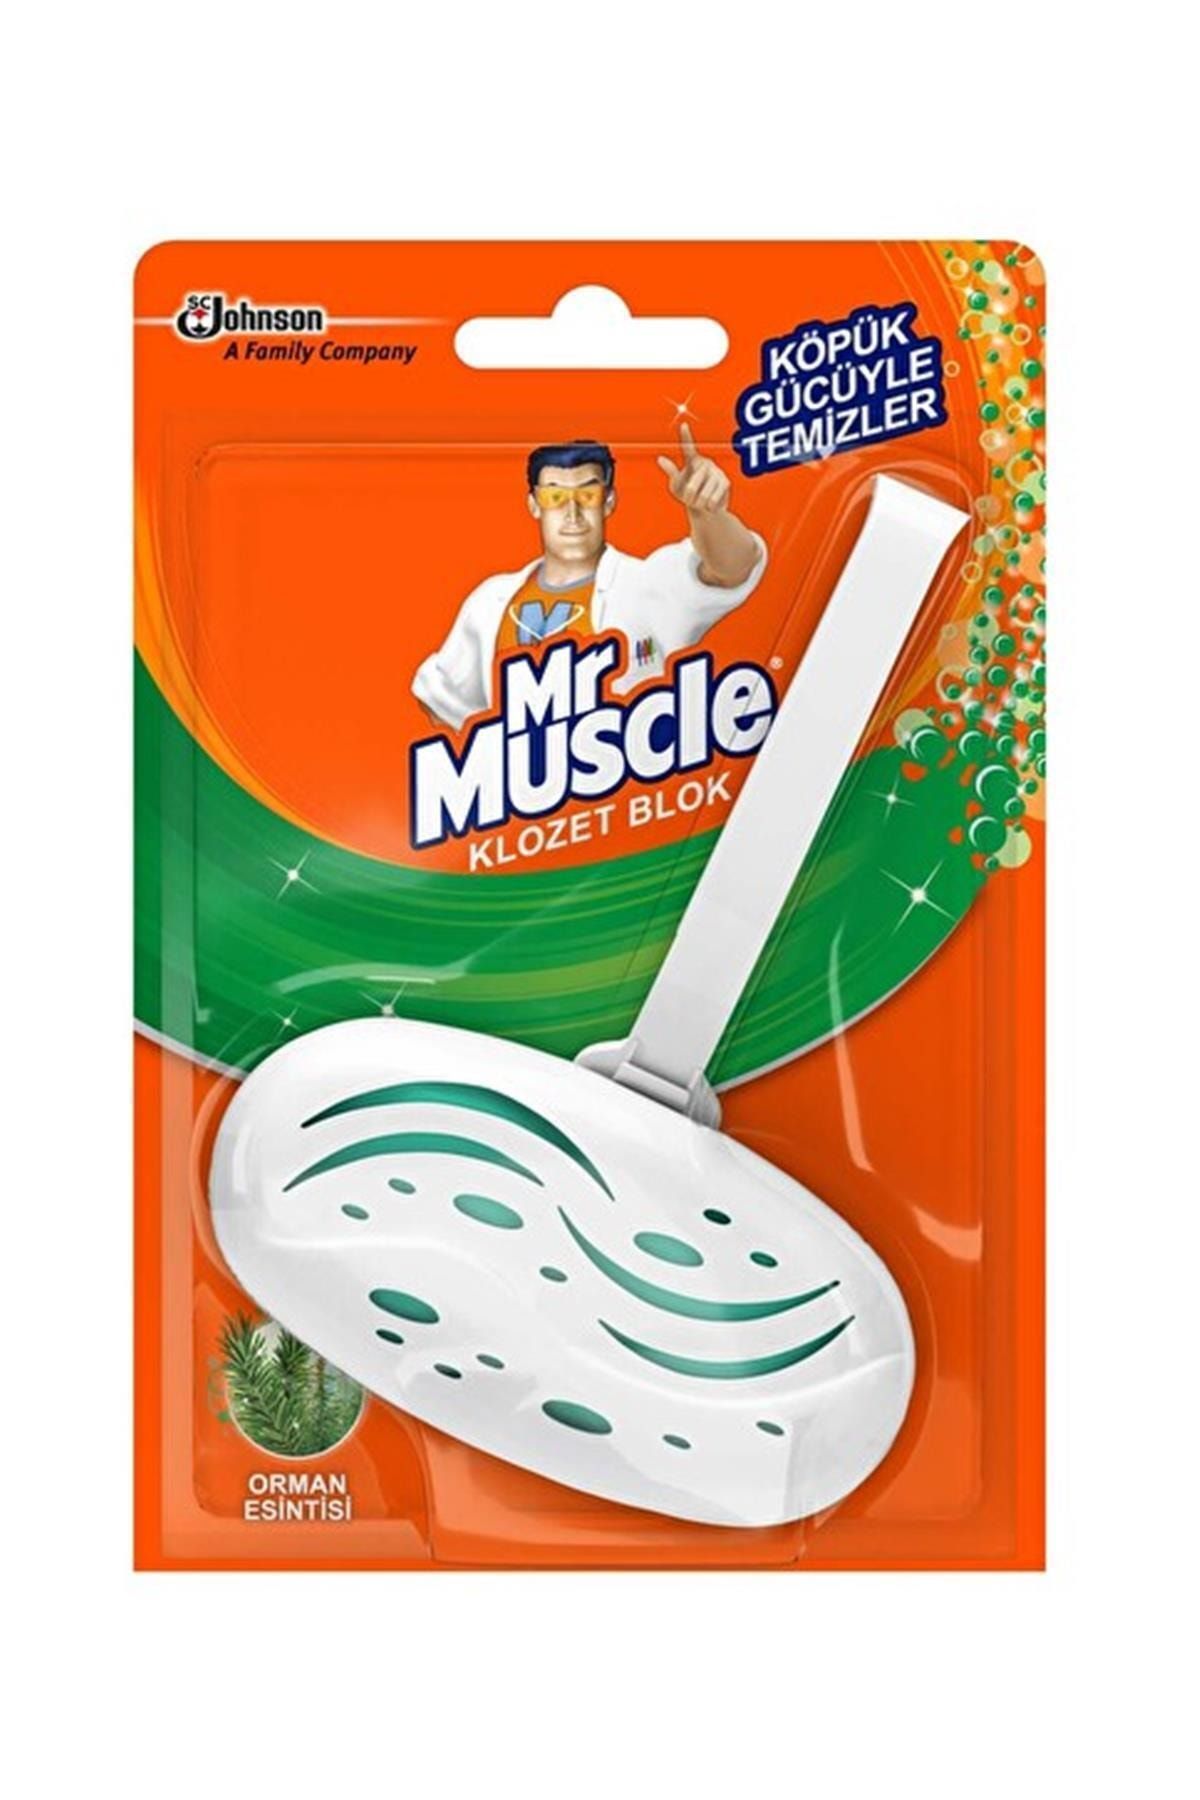 Mr. Muscle Mr.muscle Mr Muscle Klozet Blok Tuvalet Temizleyici Orman Esintisi 40g